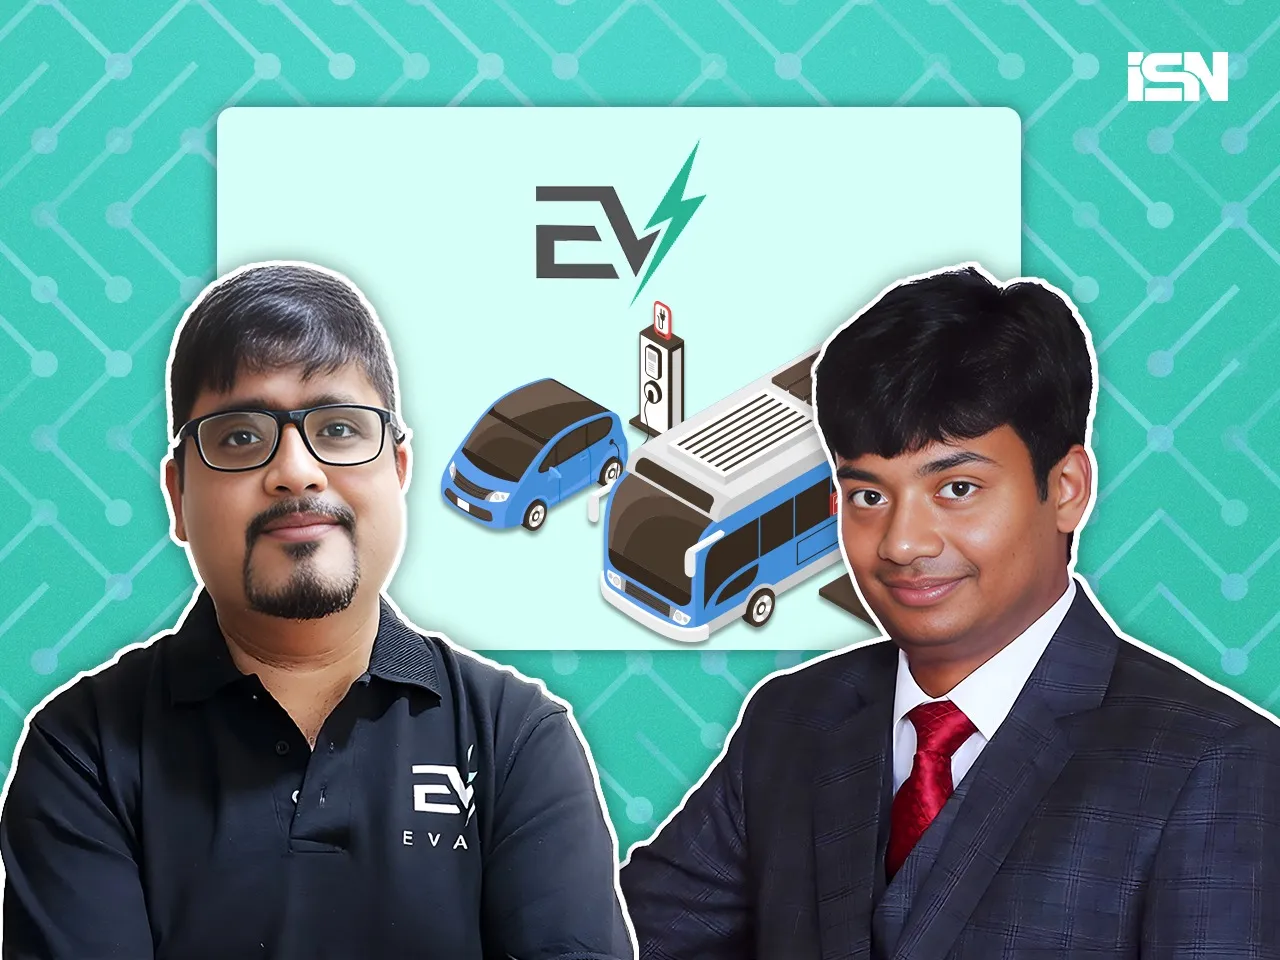 Evate Co-founders Vijay Madhusudan and Amit Shahani